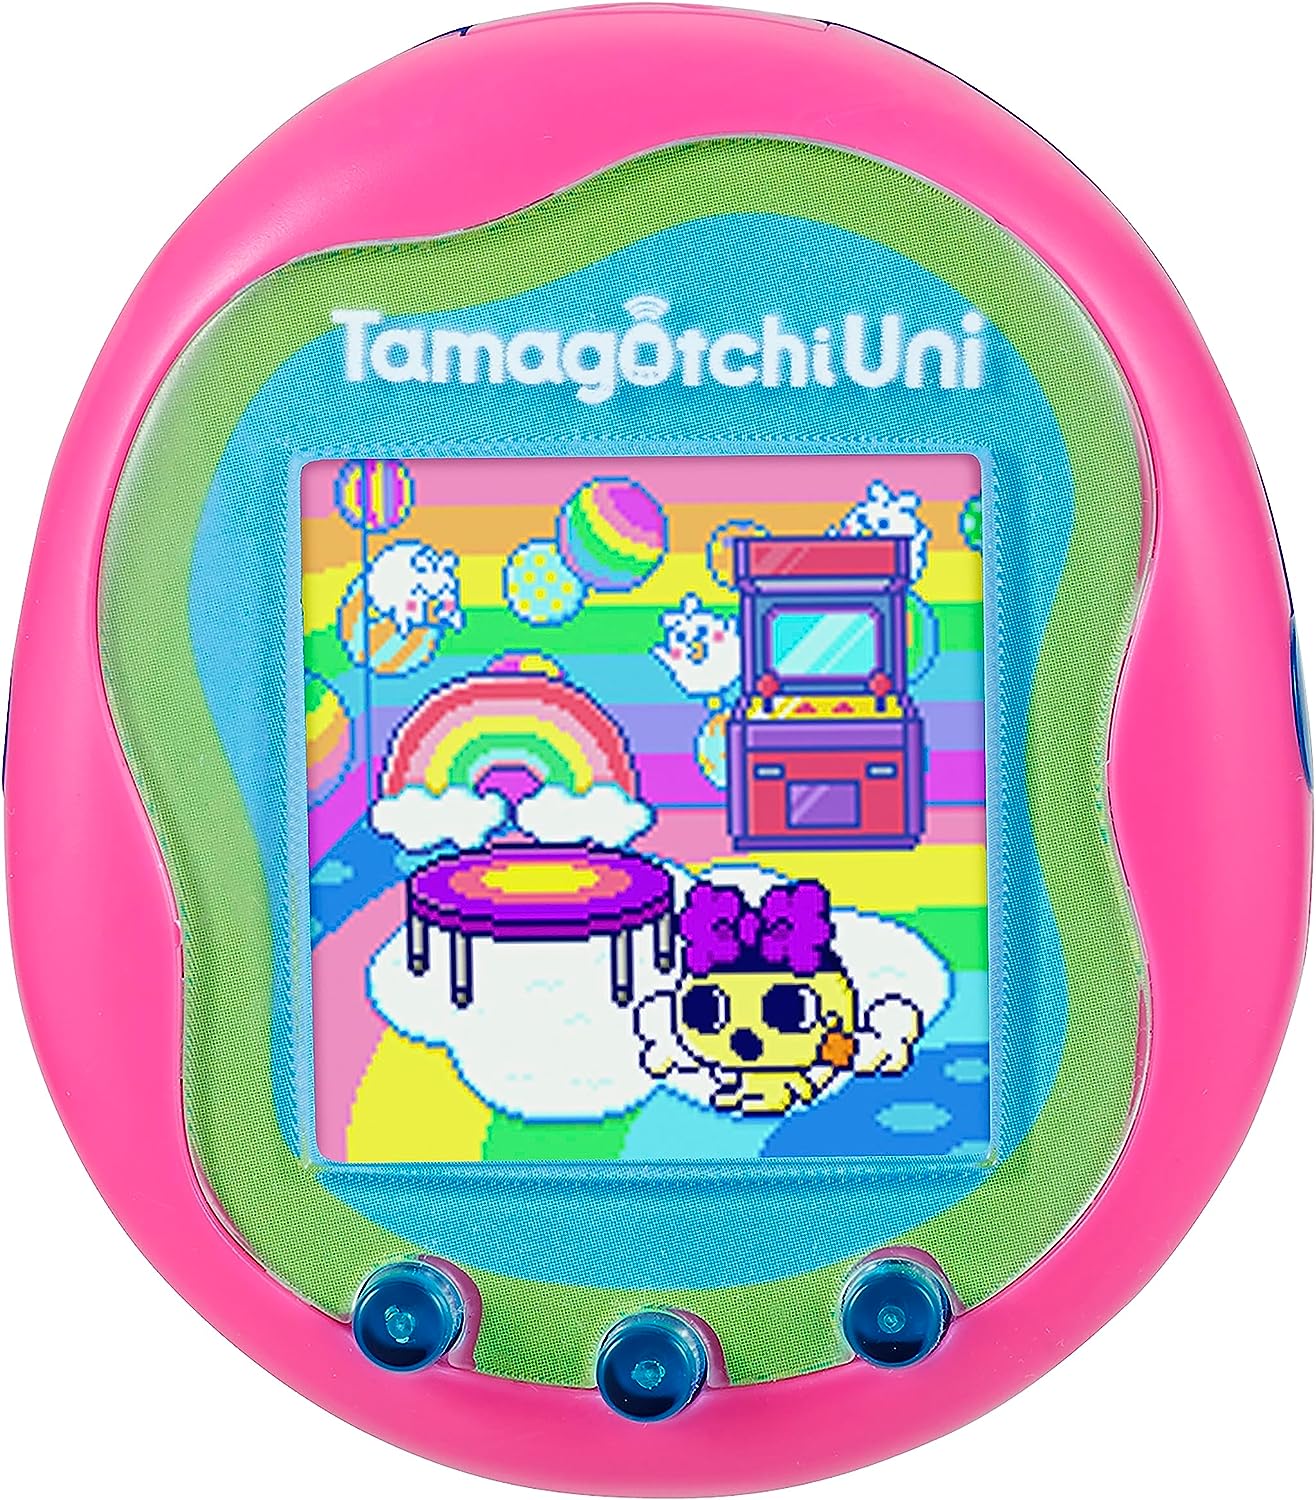 Tamagotchi Uni - Pink